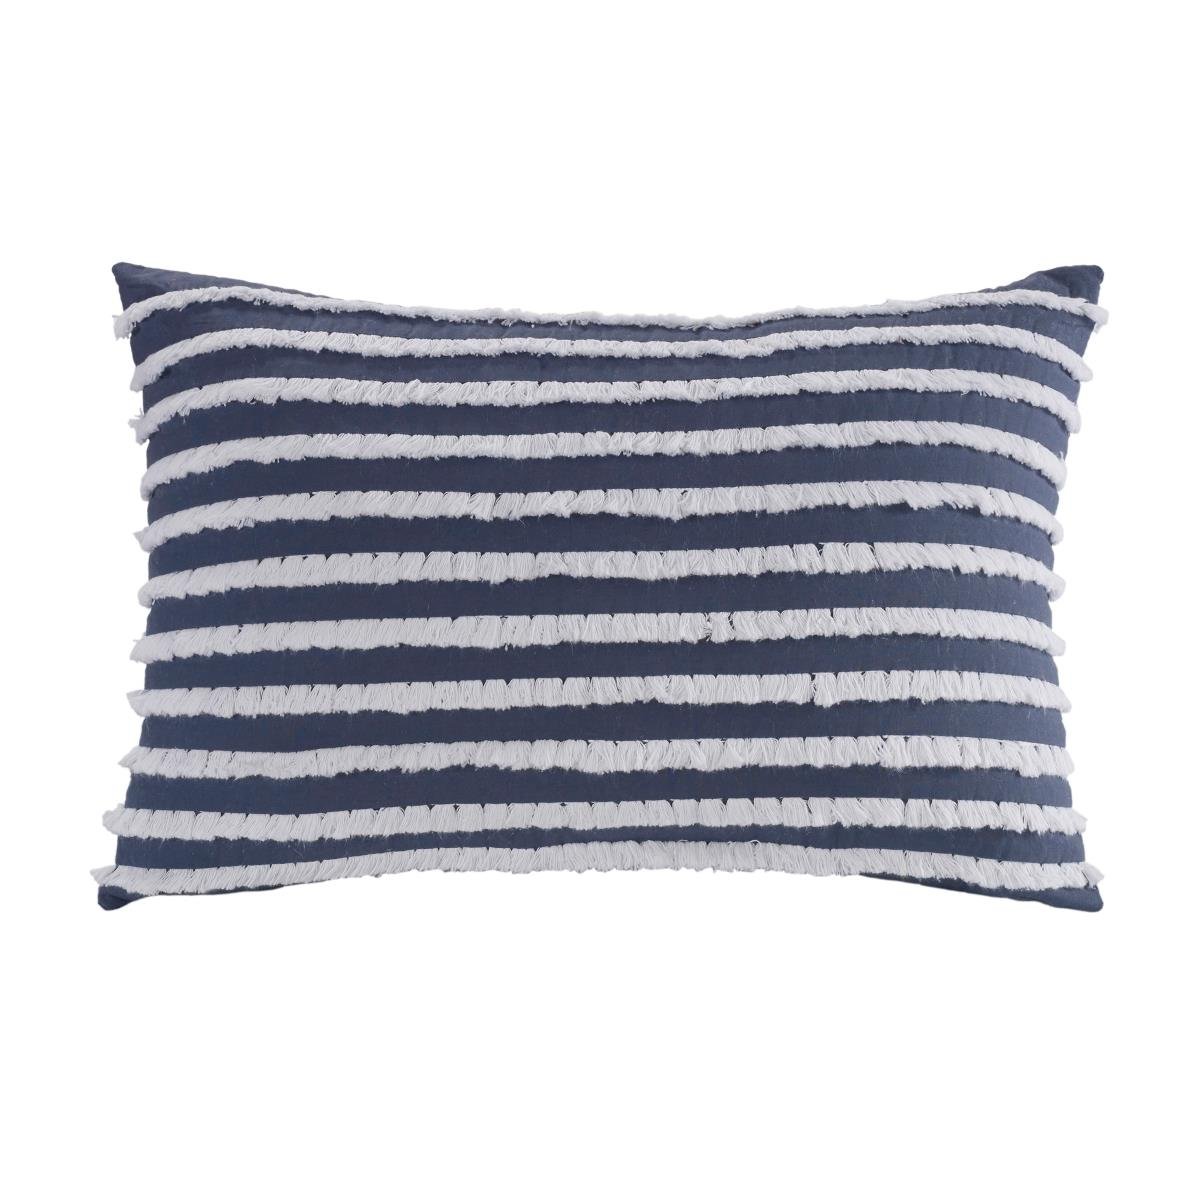 Y00307 Decorative Pillow With Horizontal Stripes - Trellis Blue